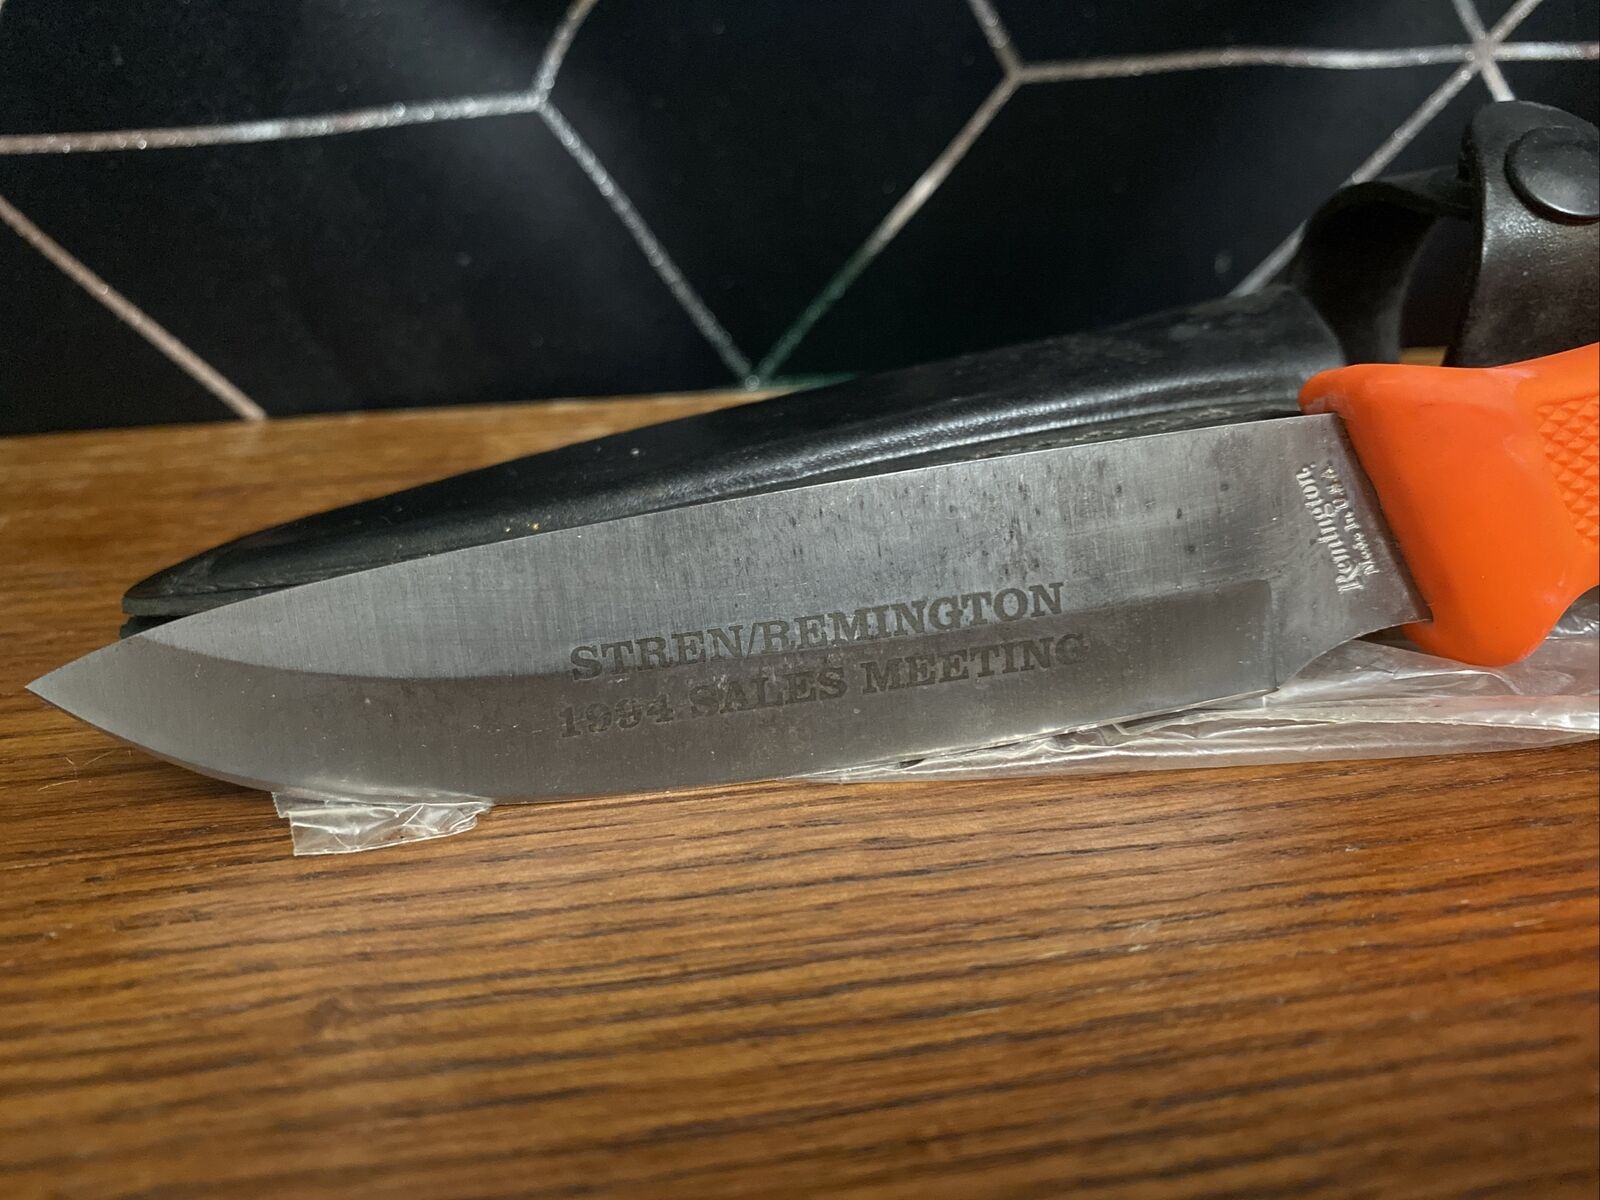 remington 1994 sales meeting knife